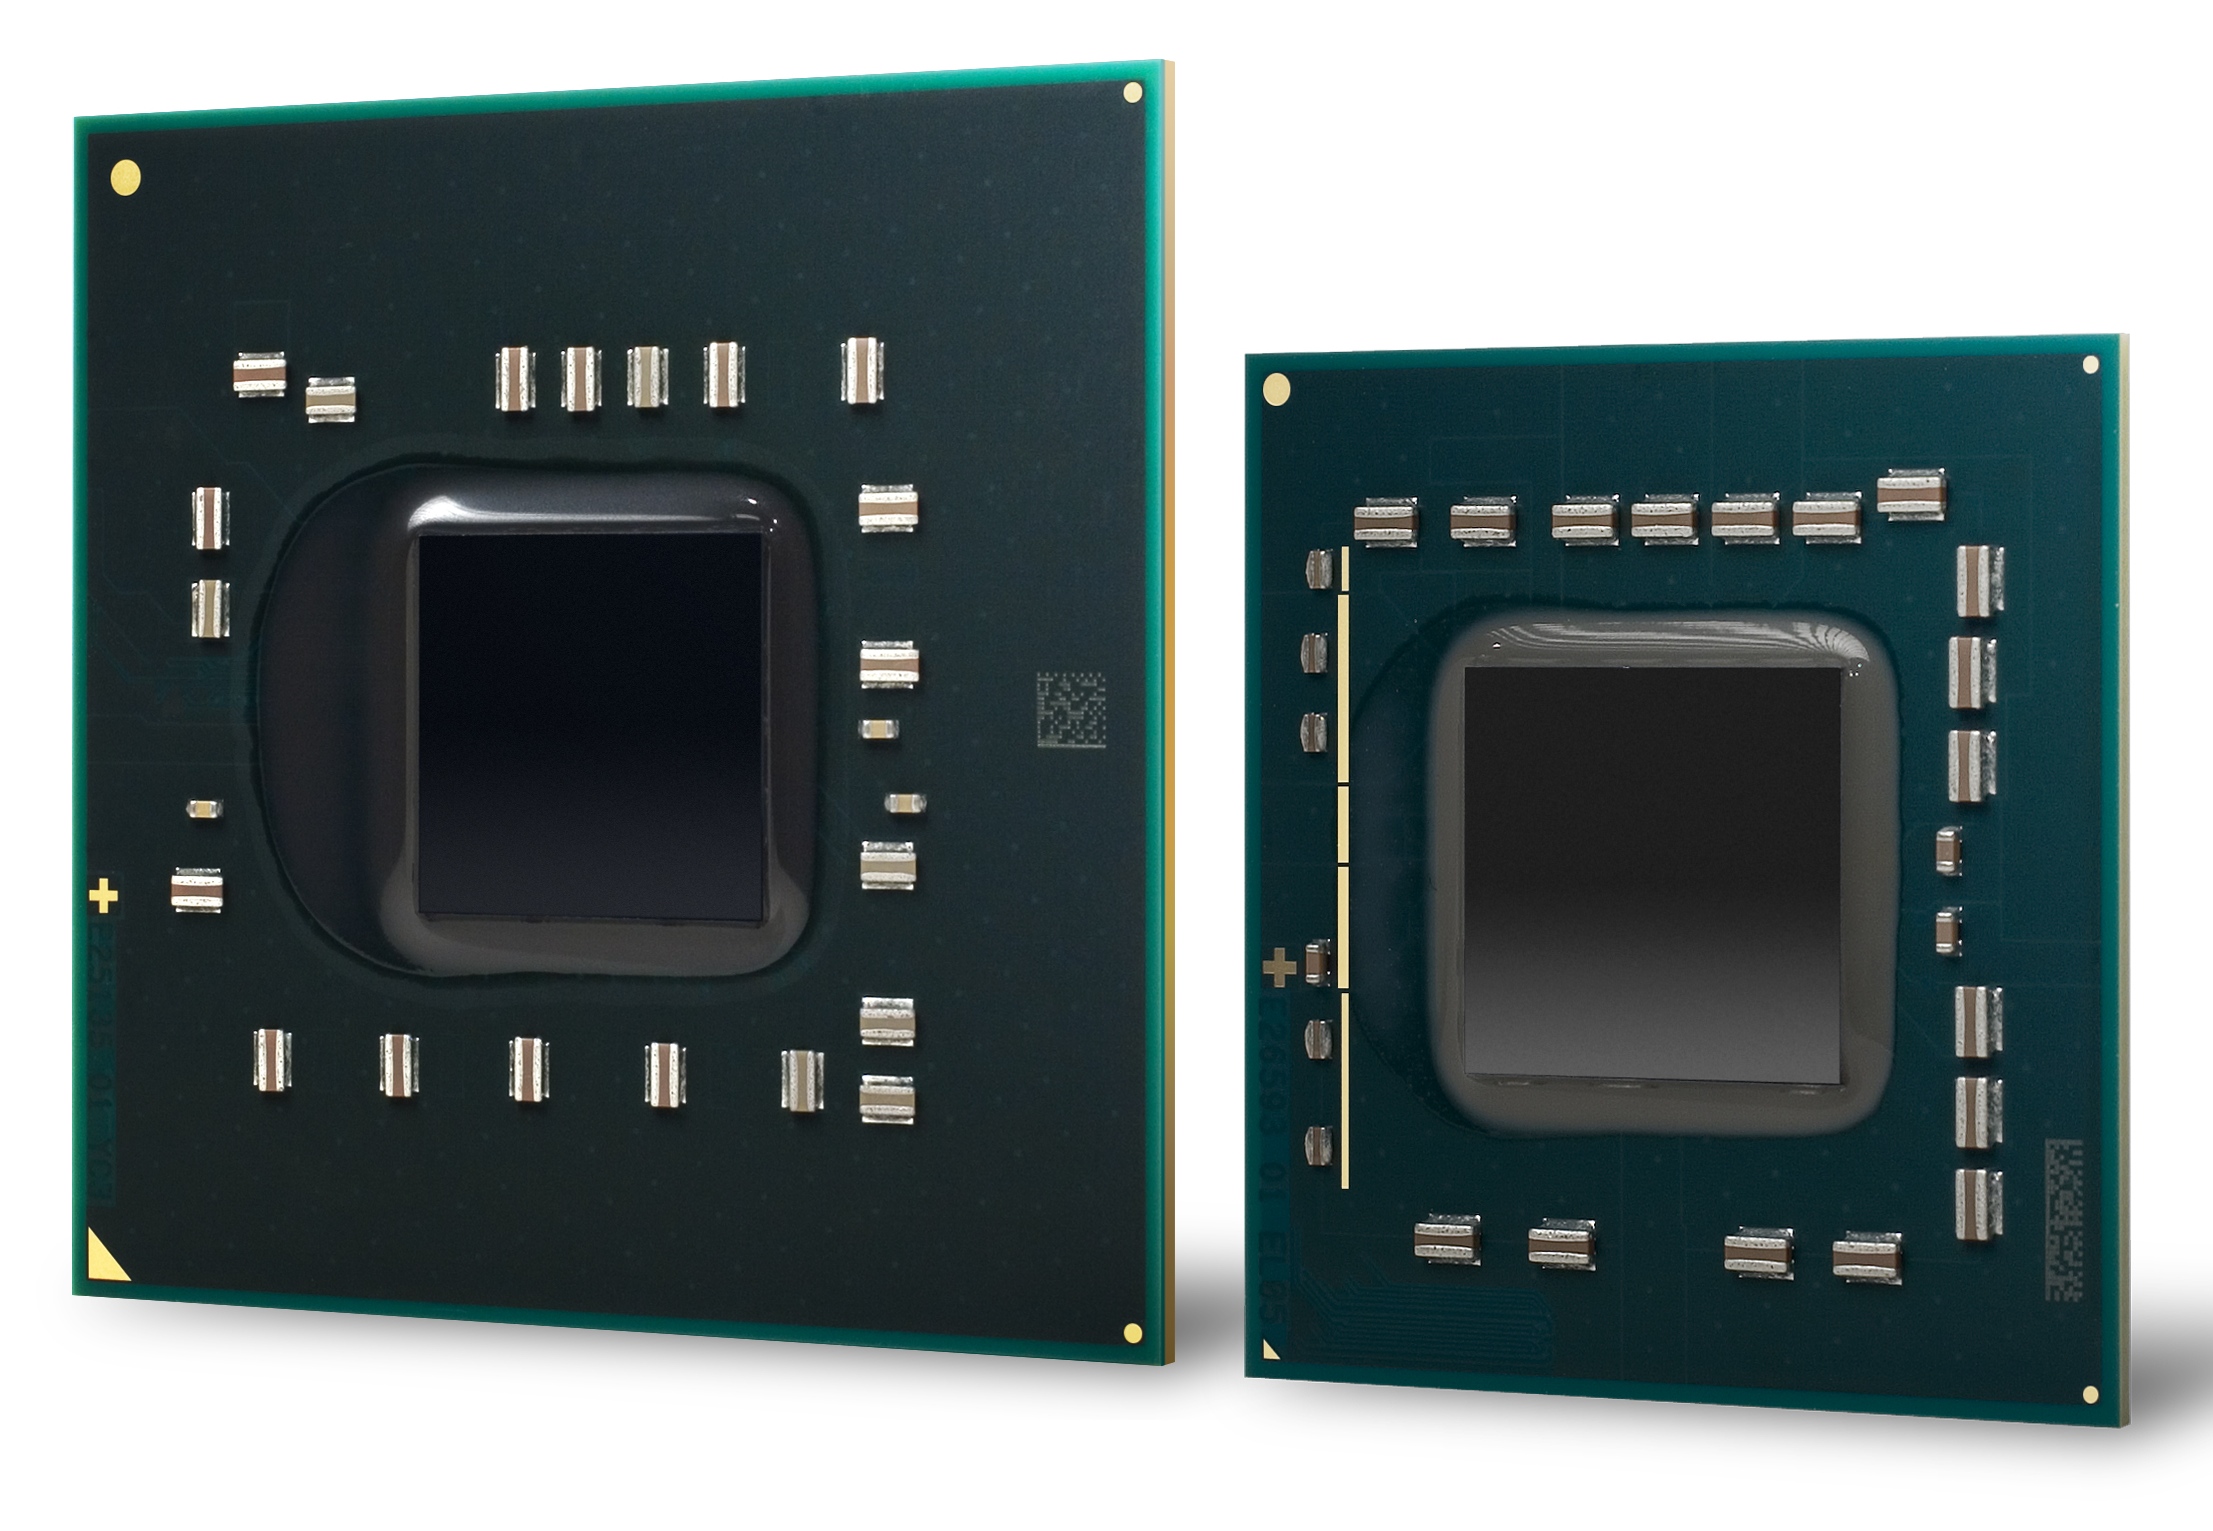 Intel gma x4500. Графический процессор Intel GMA 3150. Intel GMA x4500 видеокарта. Intel GMA 4500mhd видеокарта. Intel GMA 3150 видеокарта.